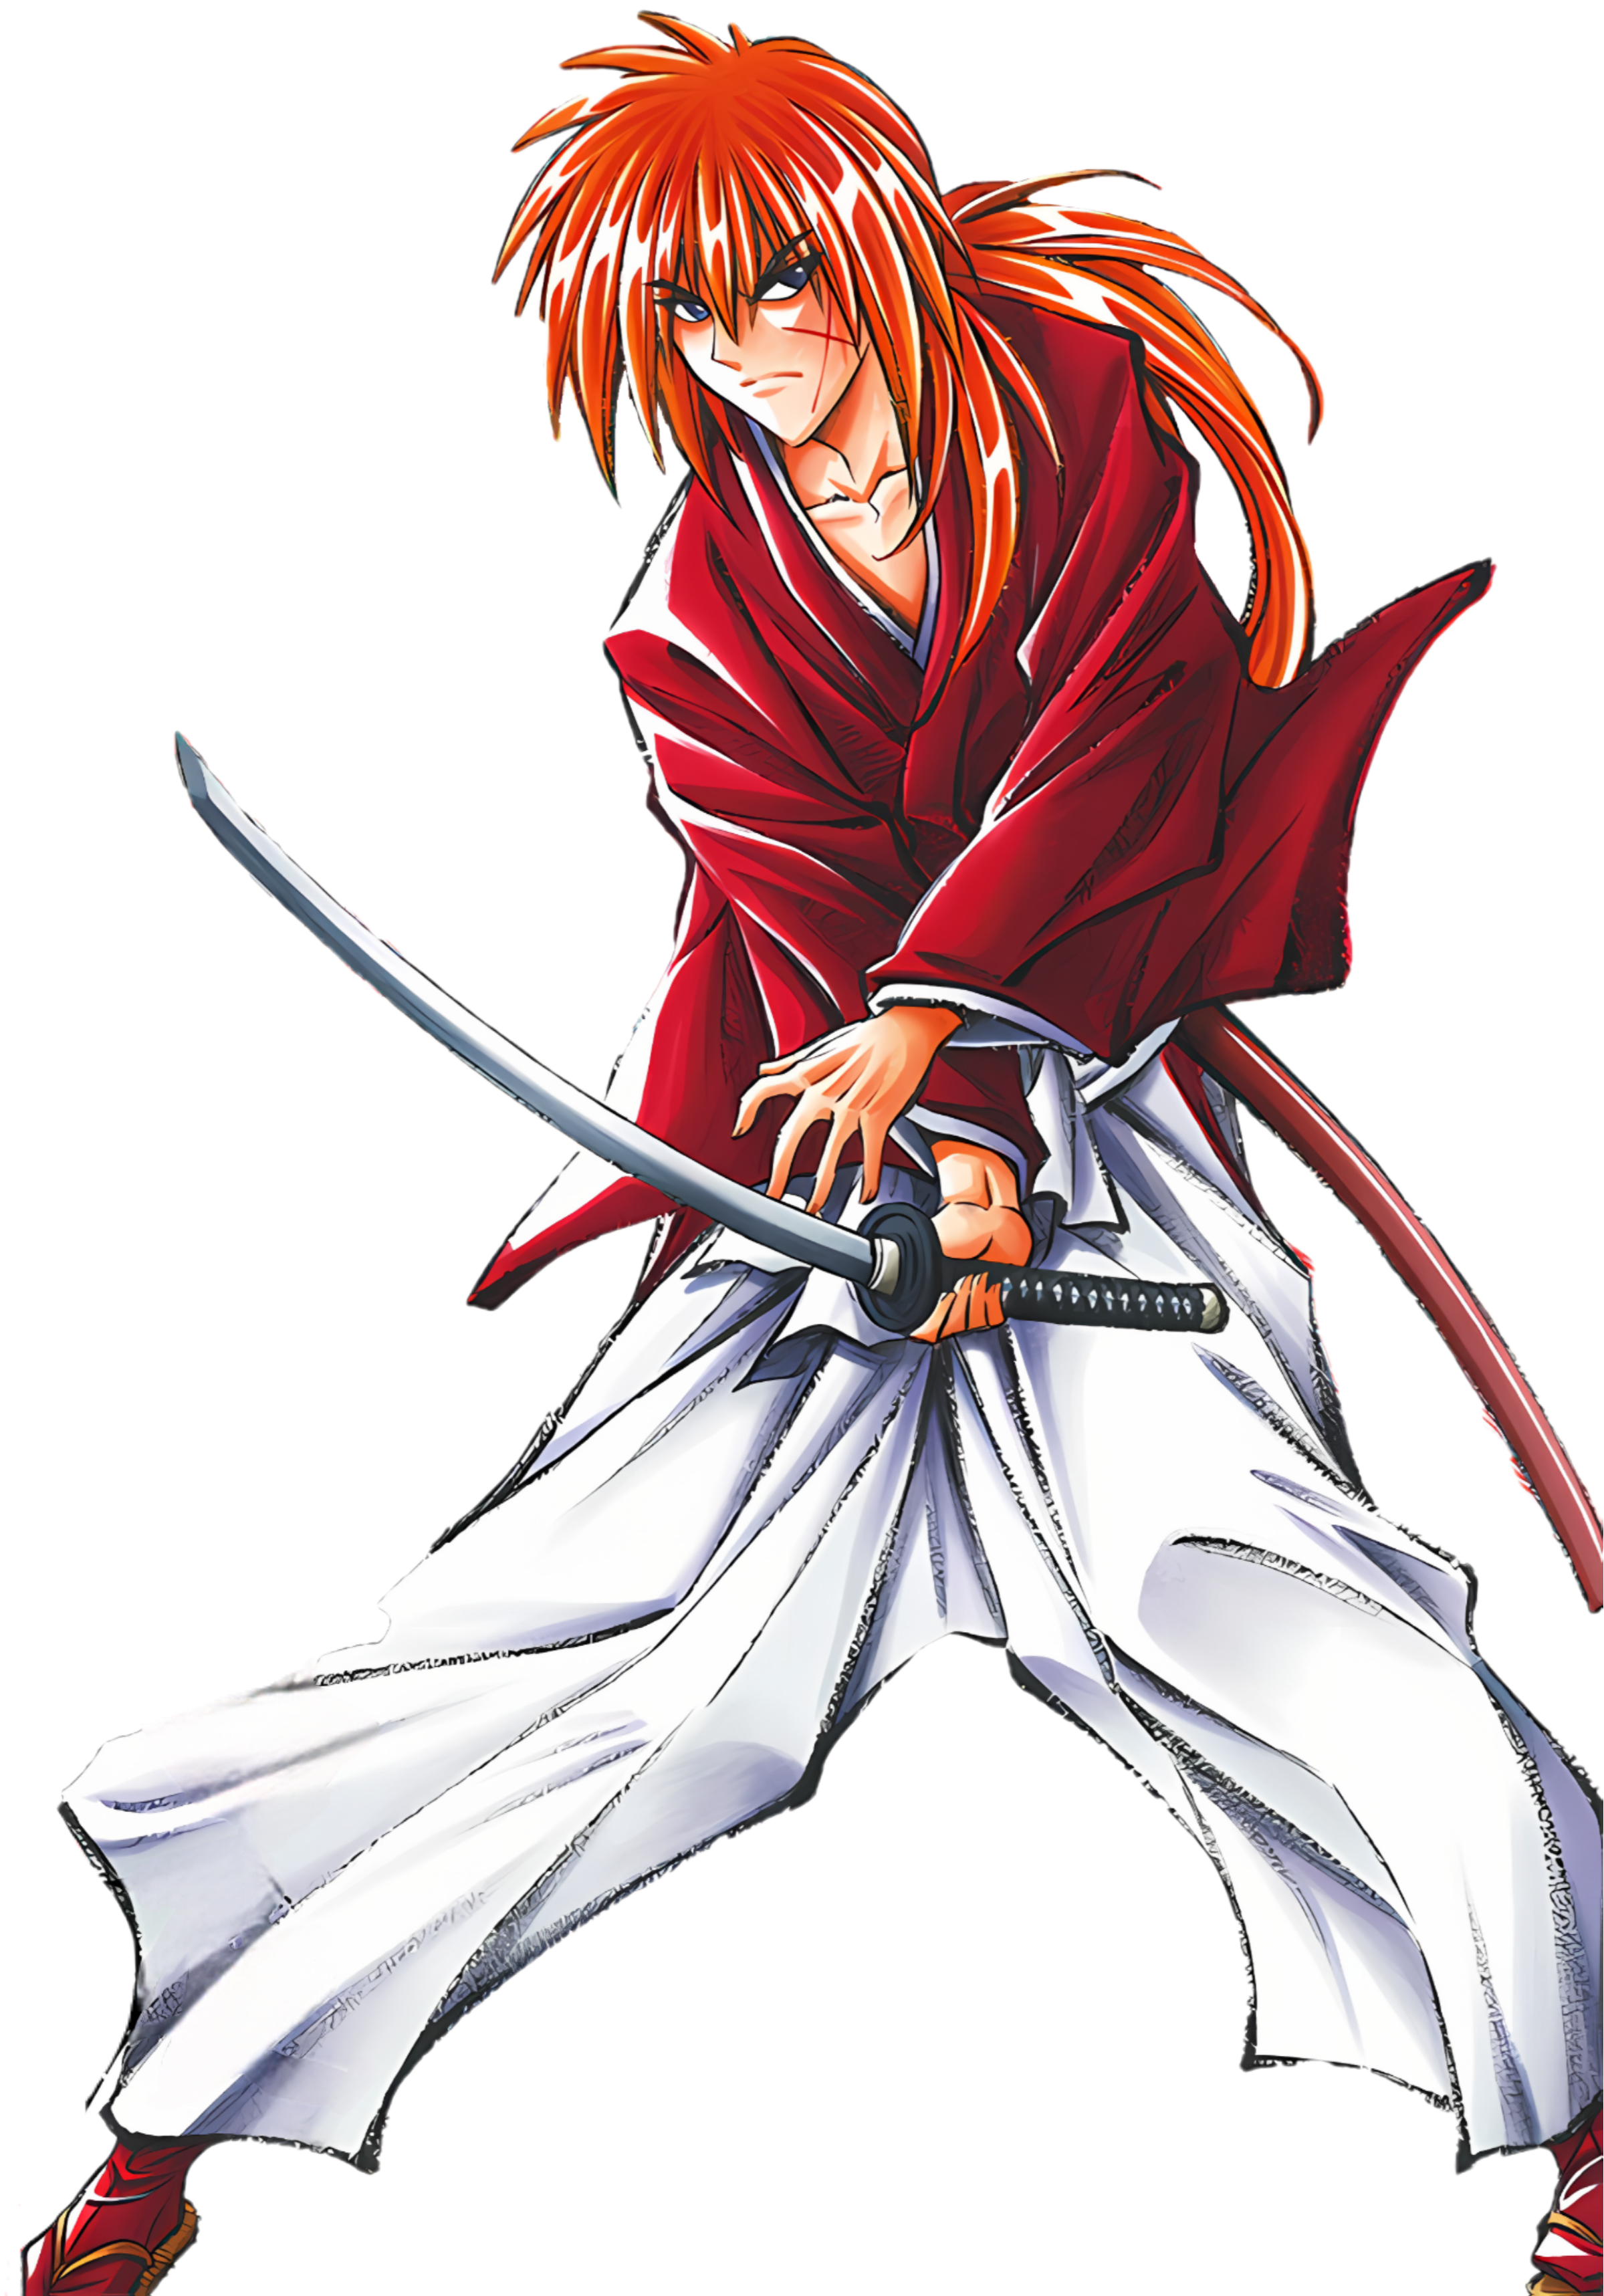 Himura Kenshin by heyethereal on DeviantArt